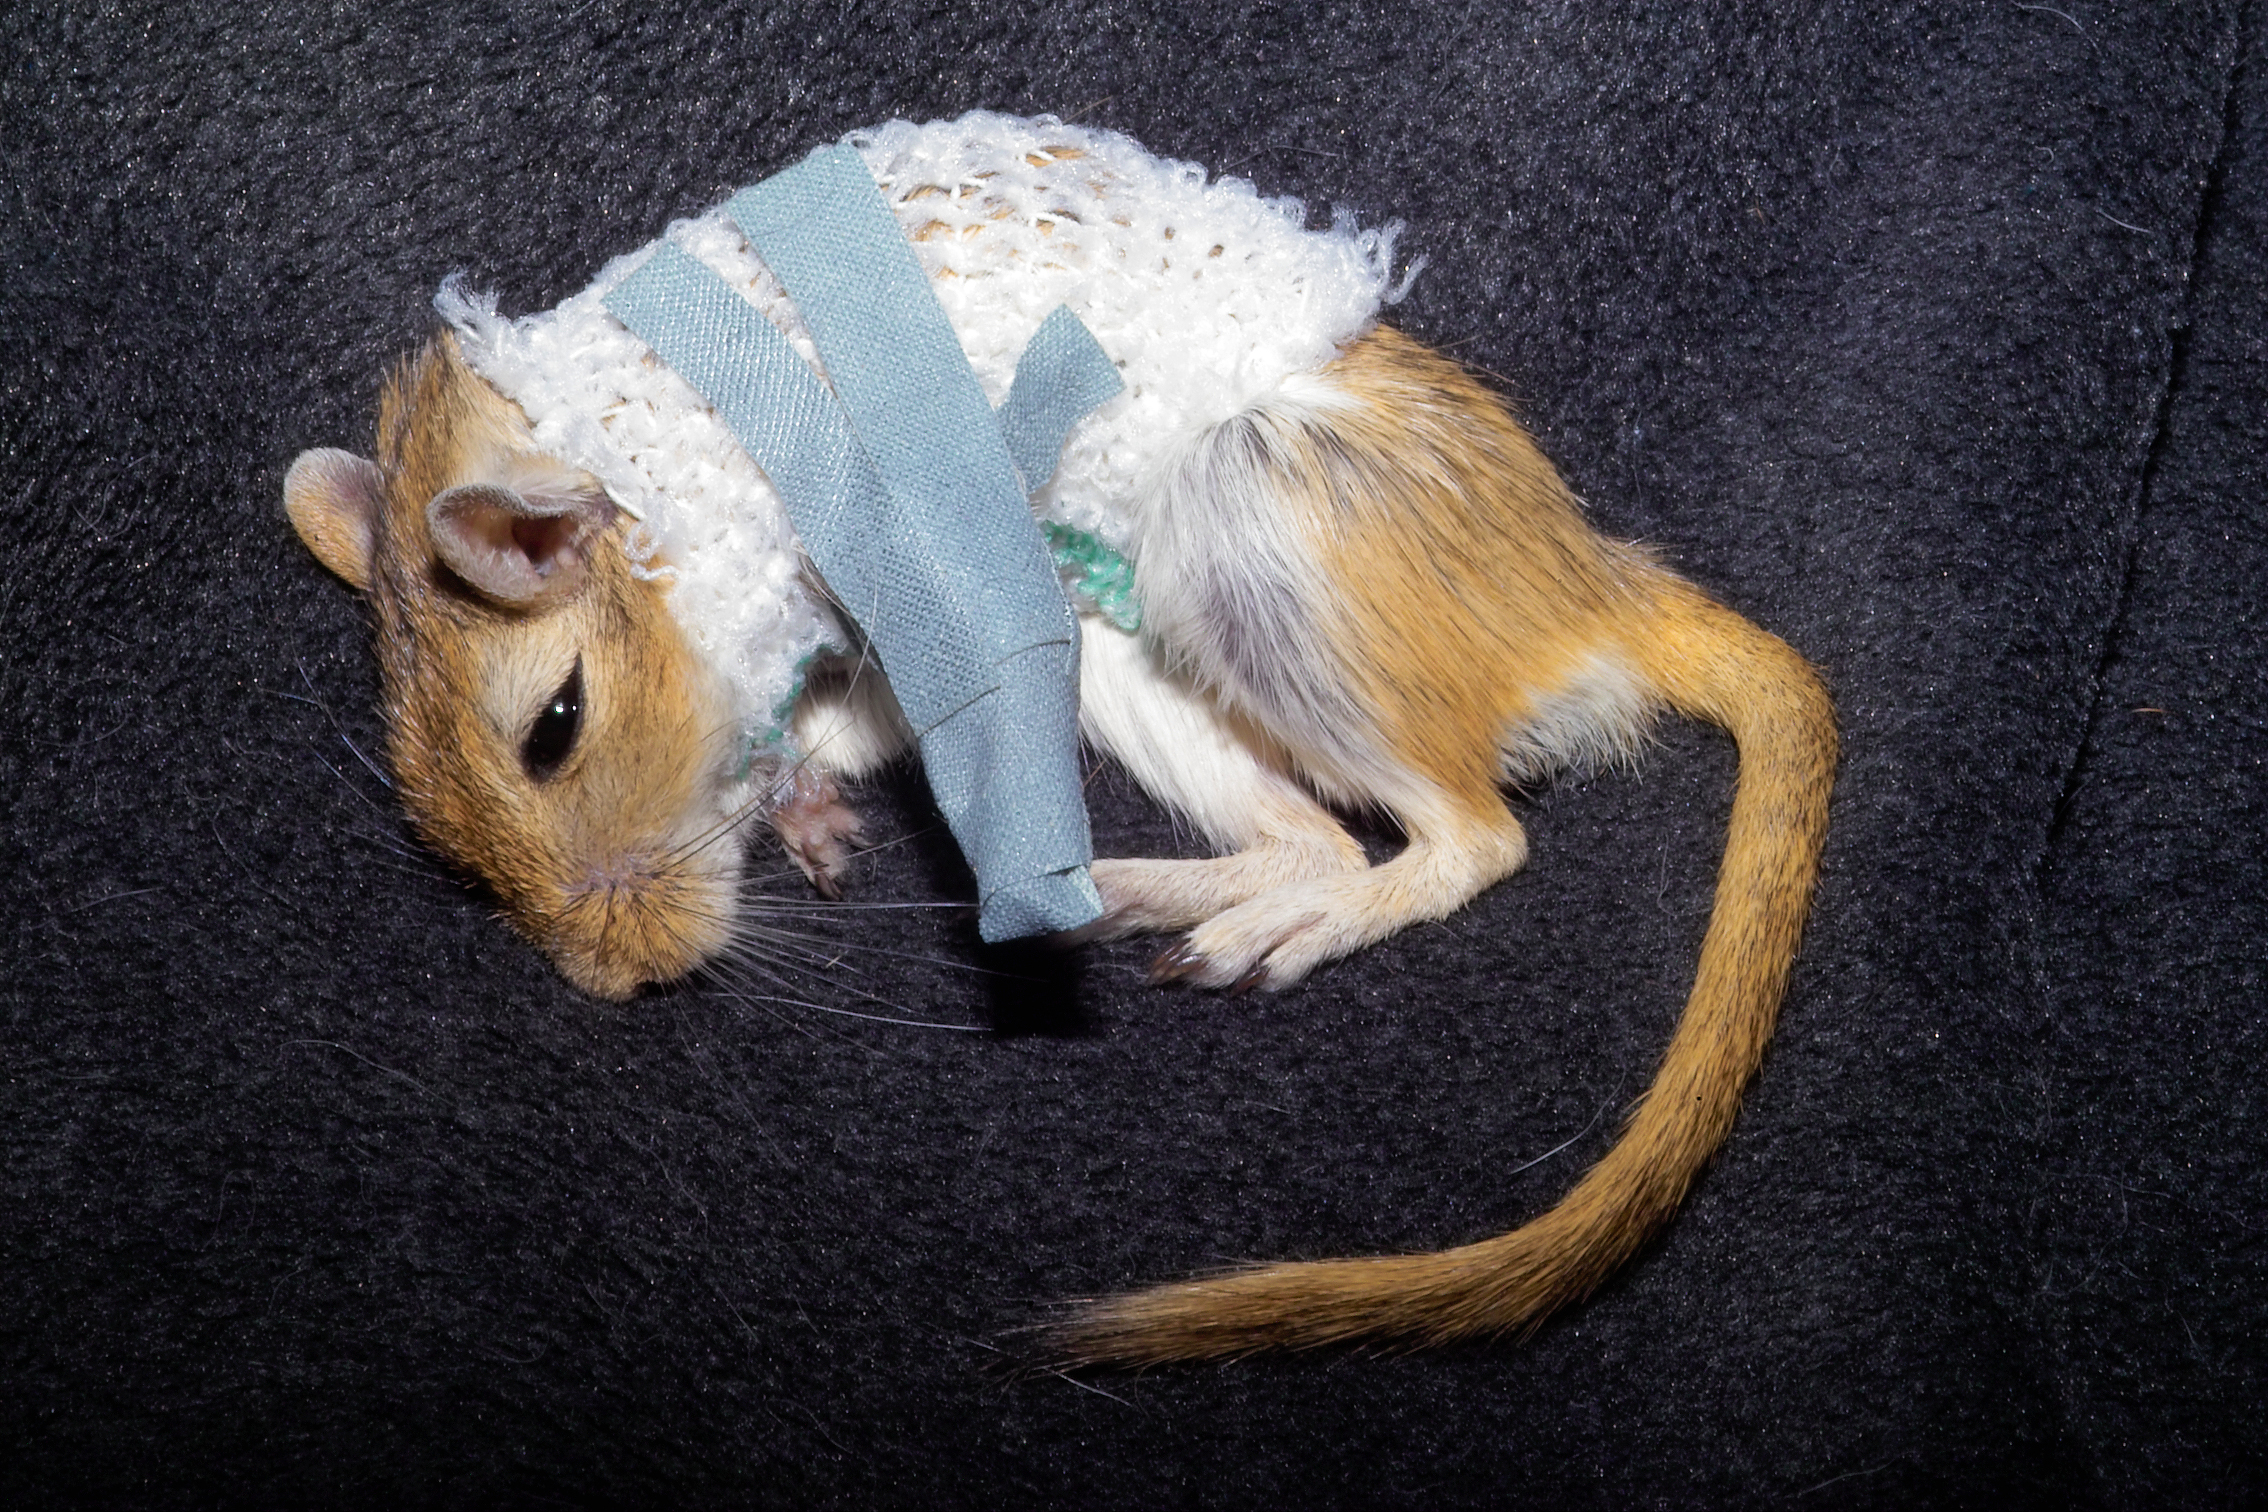 Kangaroo mouse with broken leg